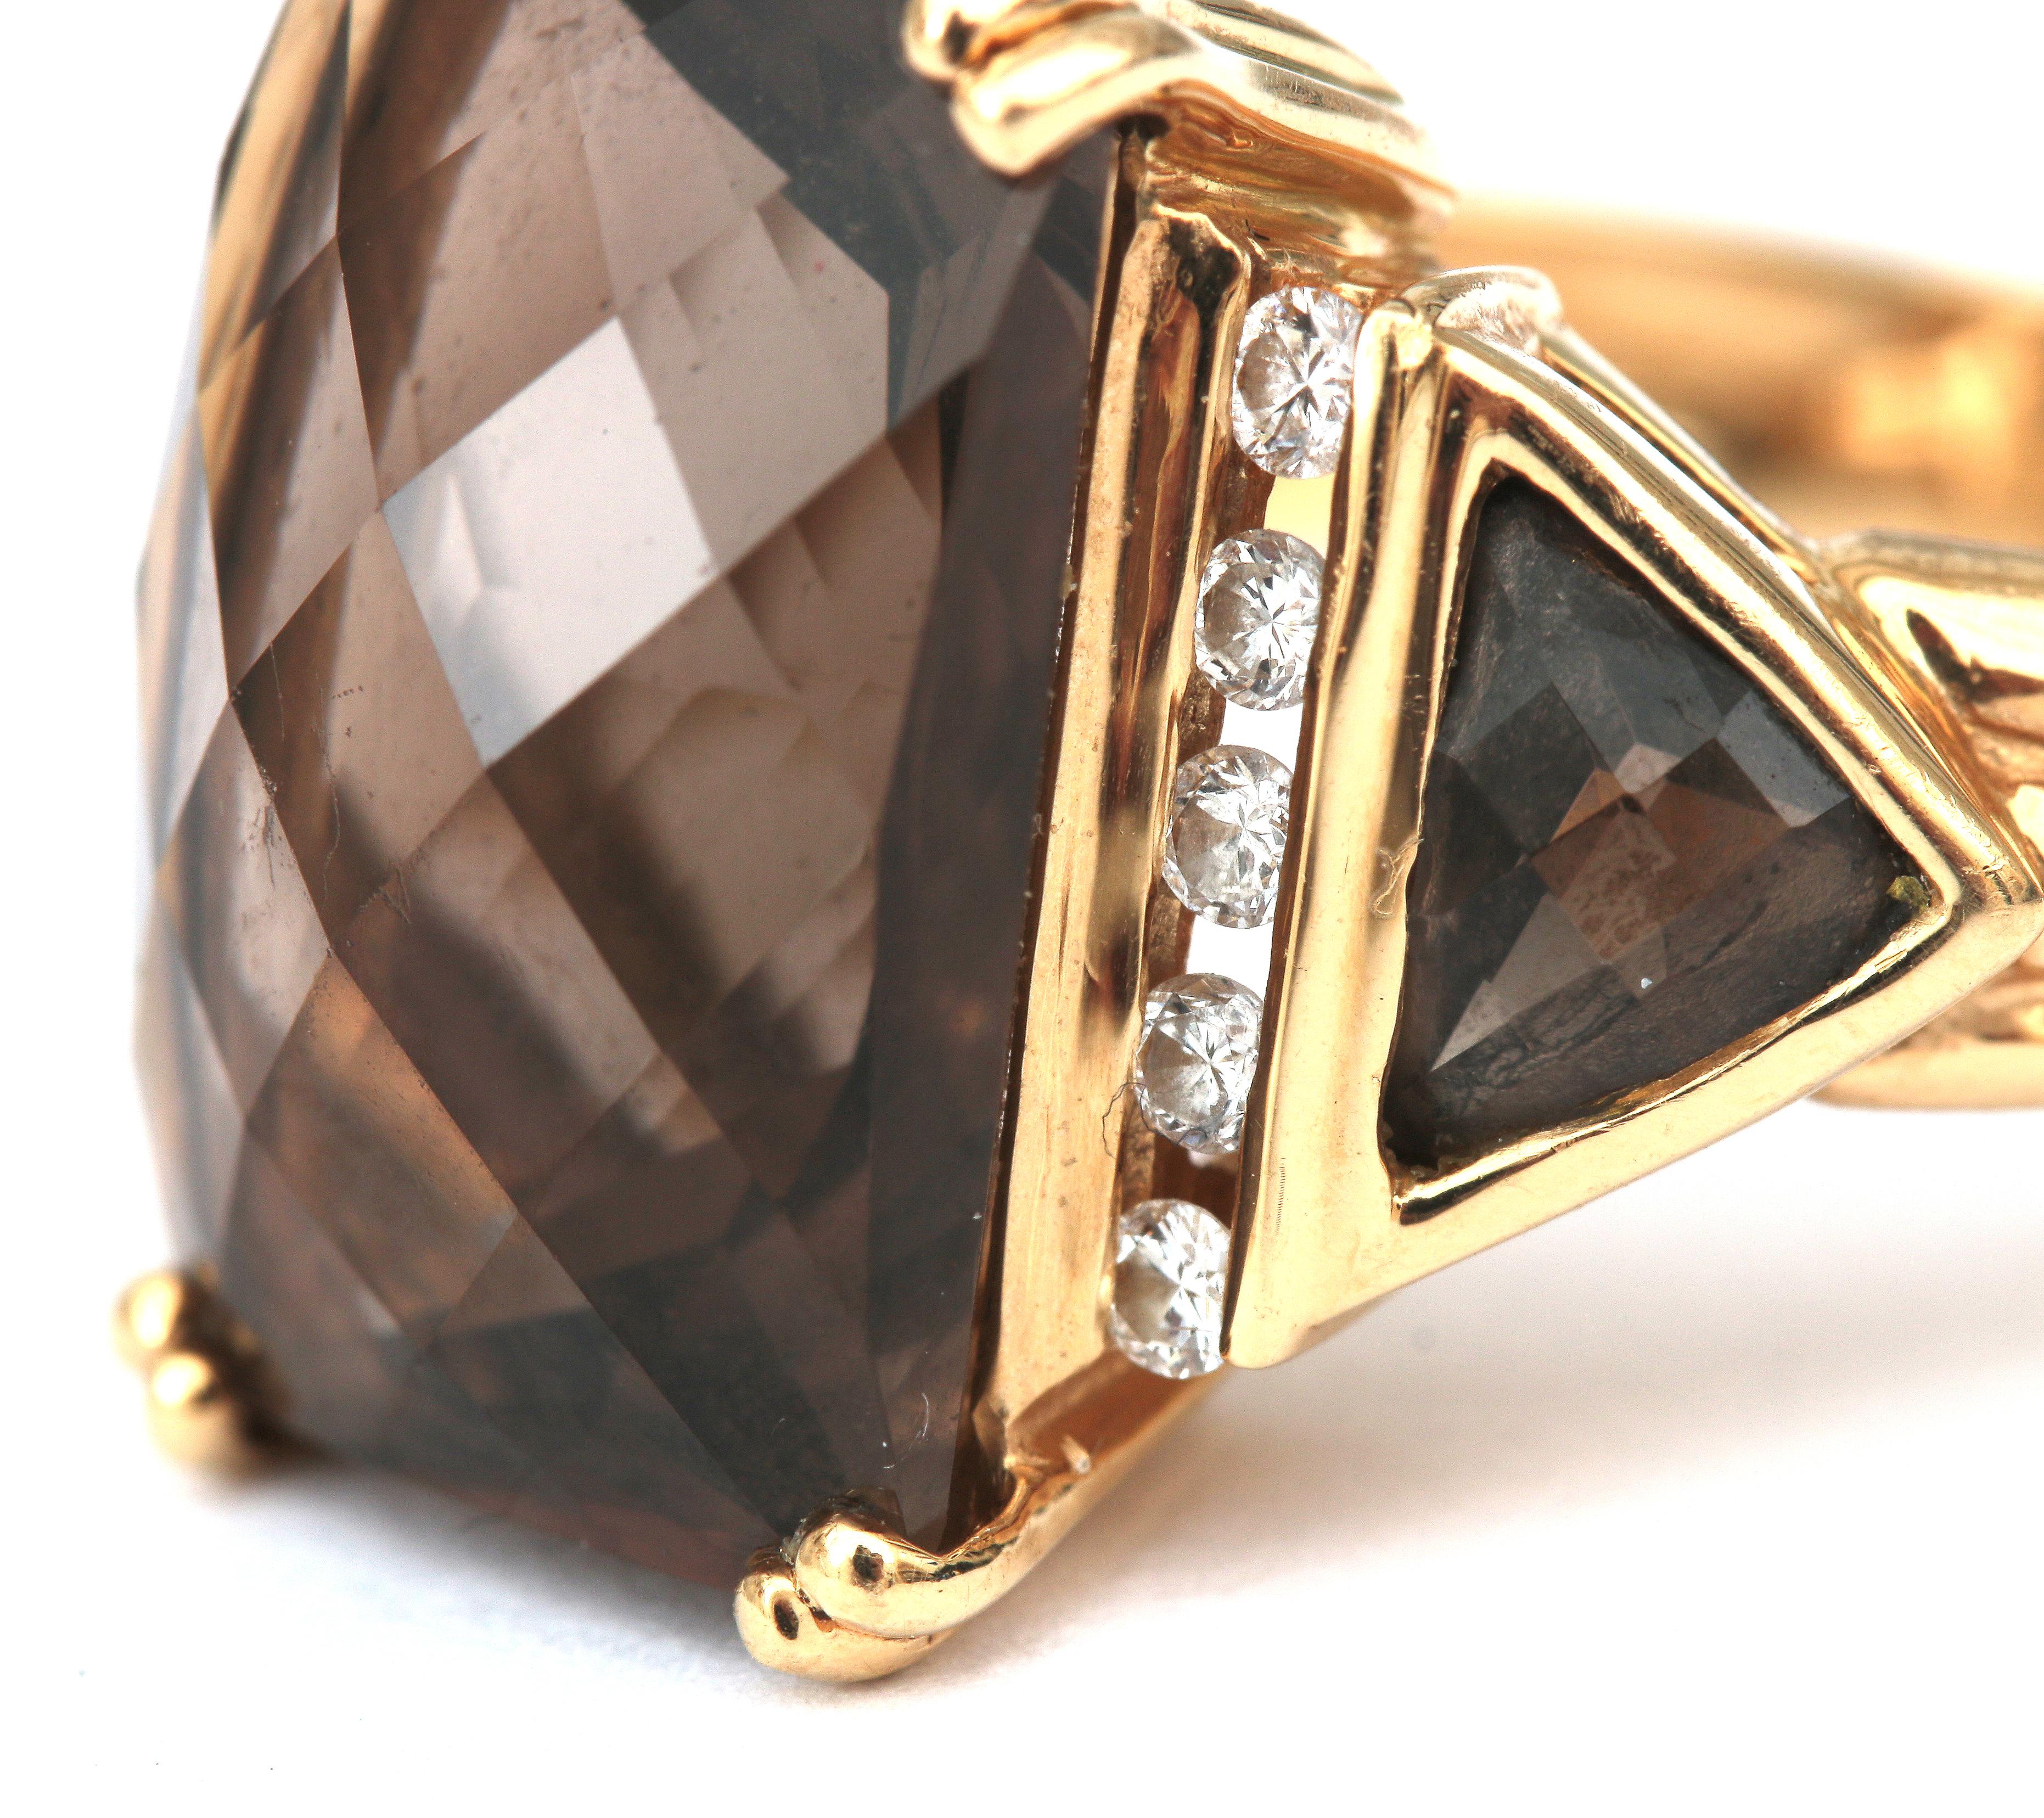 An 18 karat gold smokey quartz and diamond ring - Image 3 of 3